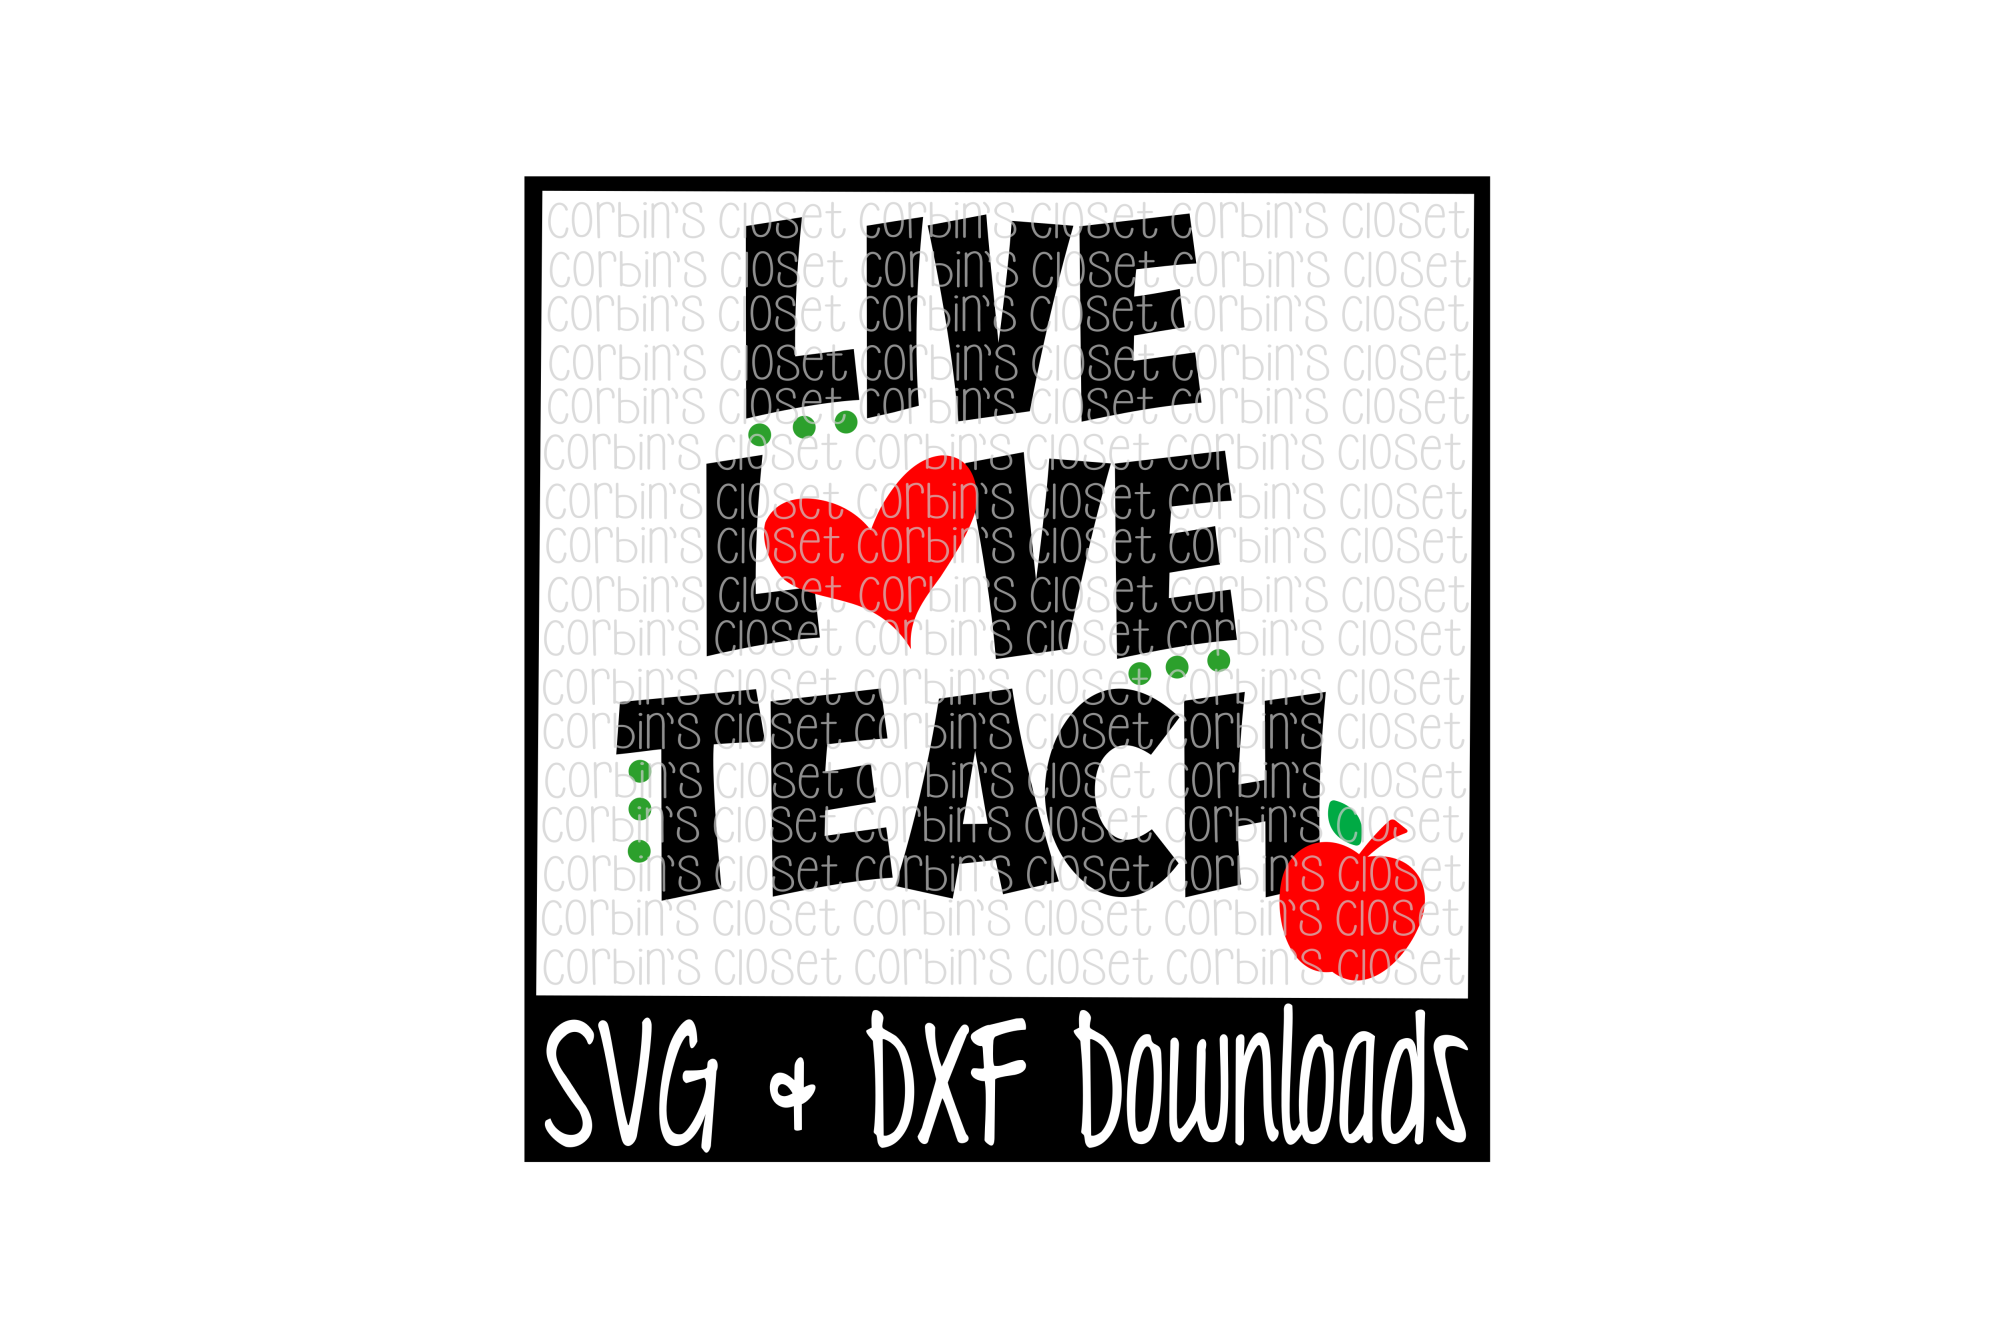 Free Free 132 Love Teacher Svg SVG PNG EPS DXF File